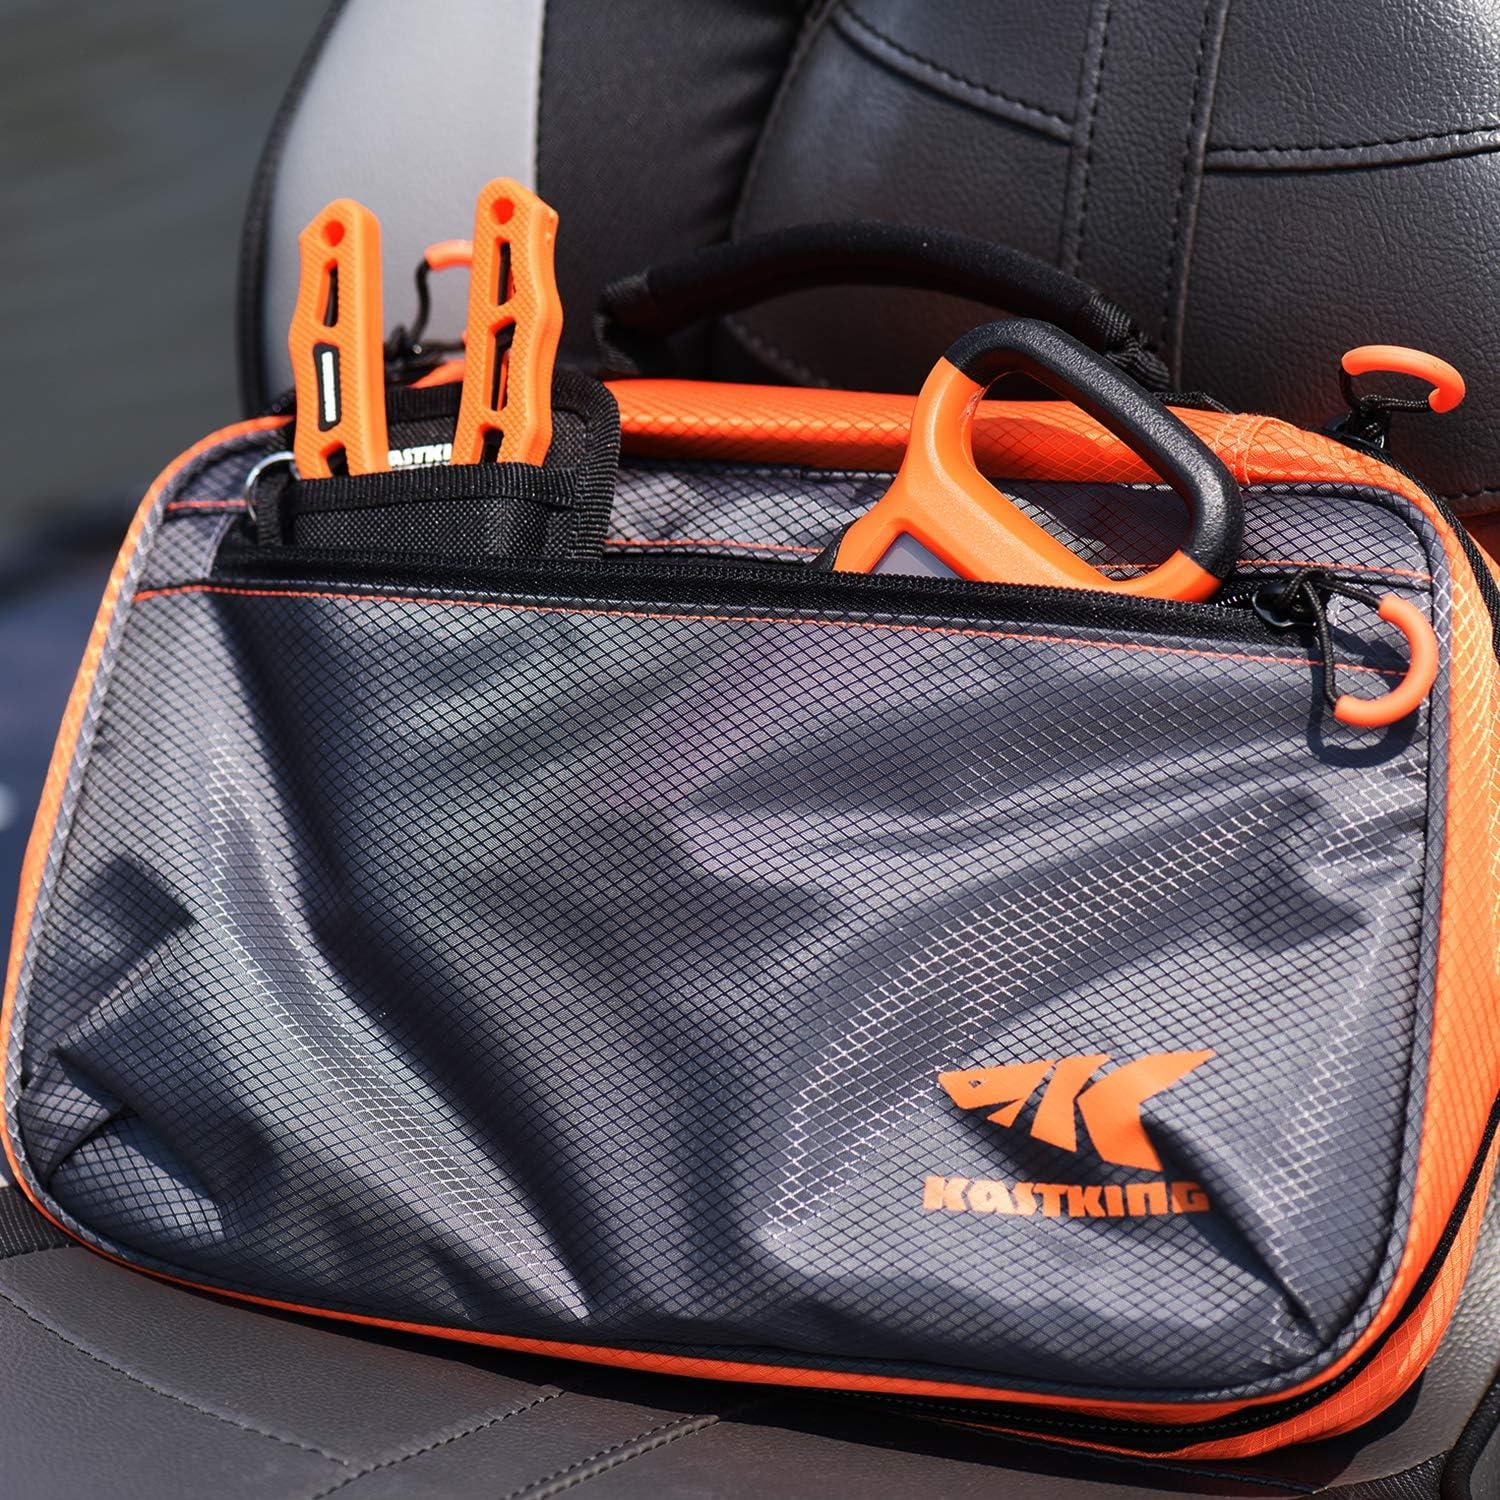 KastKing Fishing Tackle Bags  Lunker Tackle Bag SMALL 